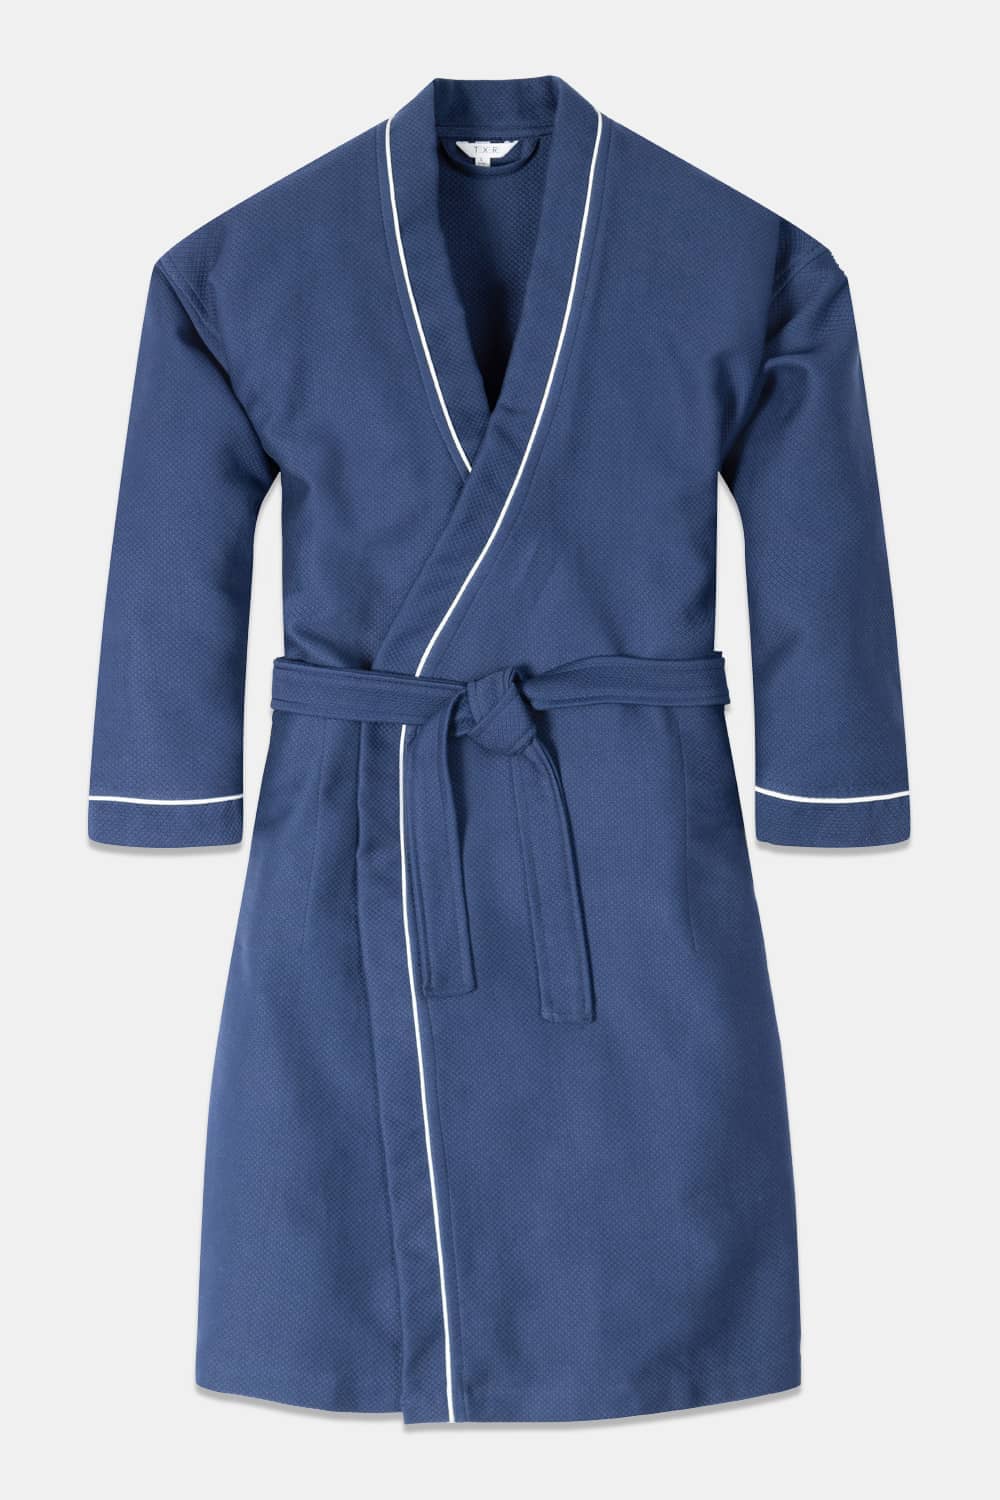 Texere Men's Modal Kimono Bathrobe with Quilted Design Mens>Sleepwear>Robe Fishers Finery MIDNIGHT BLUE MEDIUM 